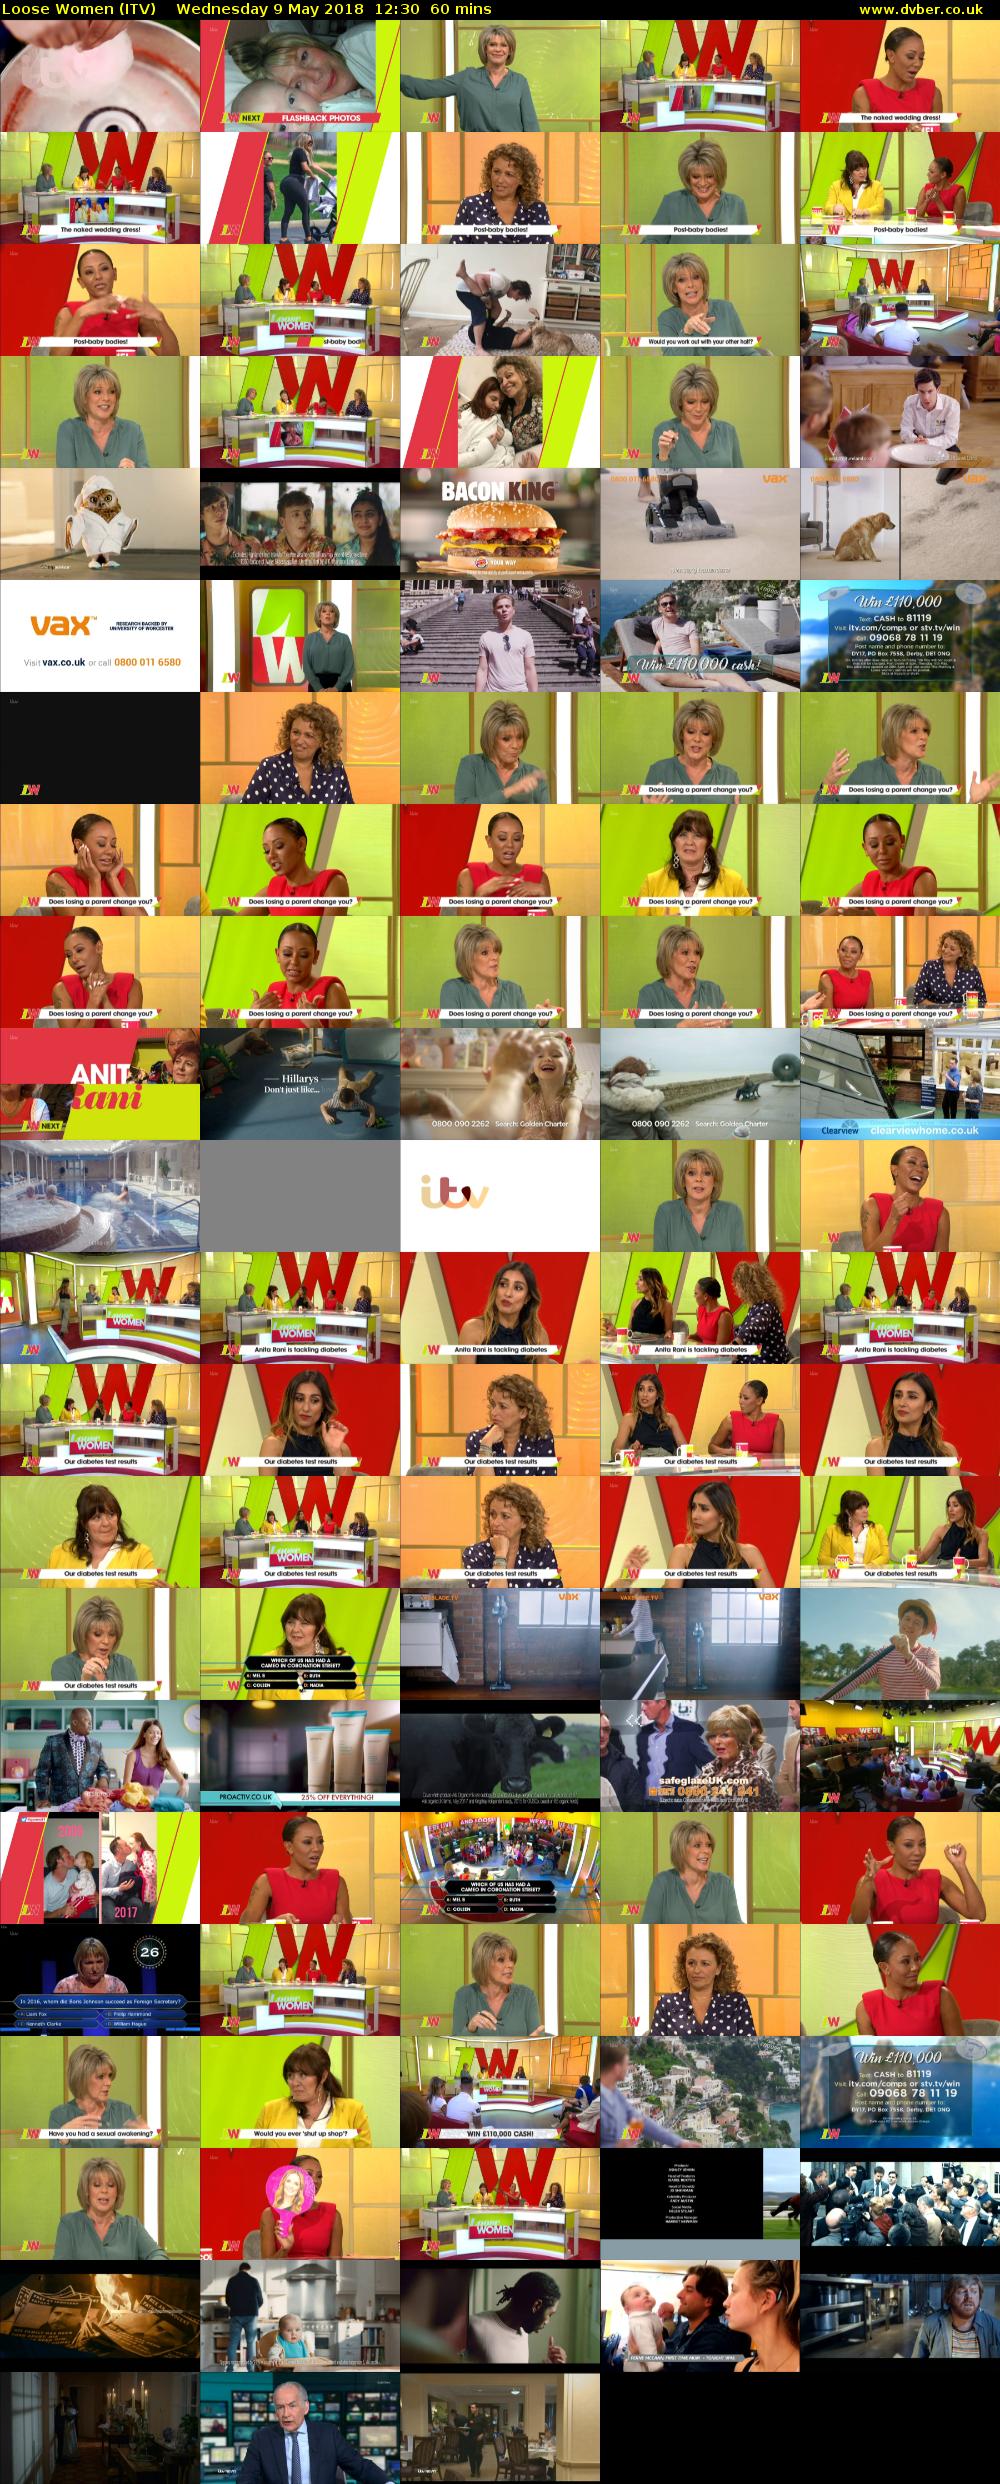 Loose Women (ITV) Wednesday 9 May 2018 12:30 - 13:30